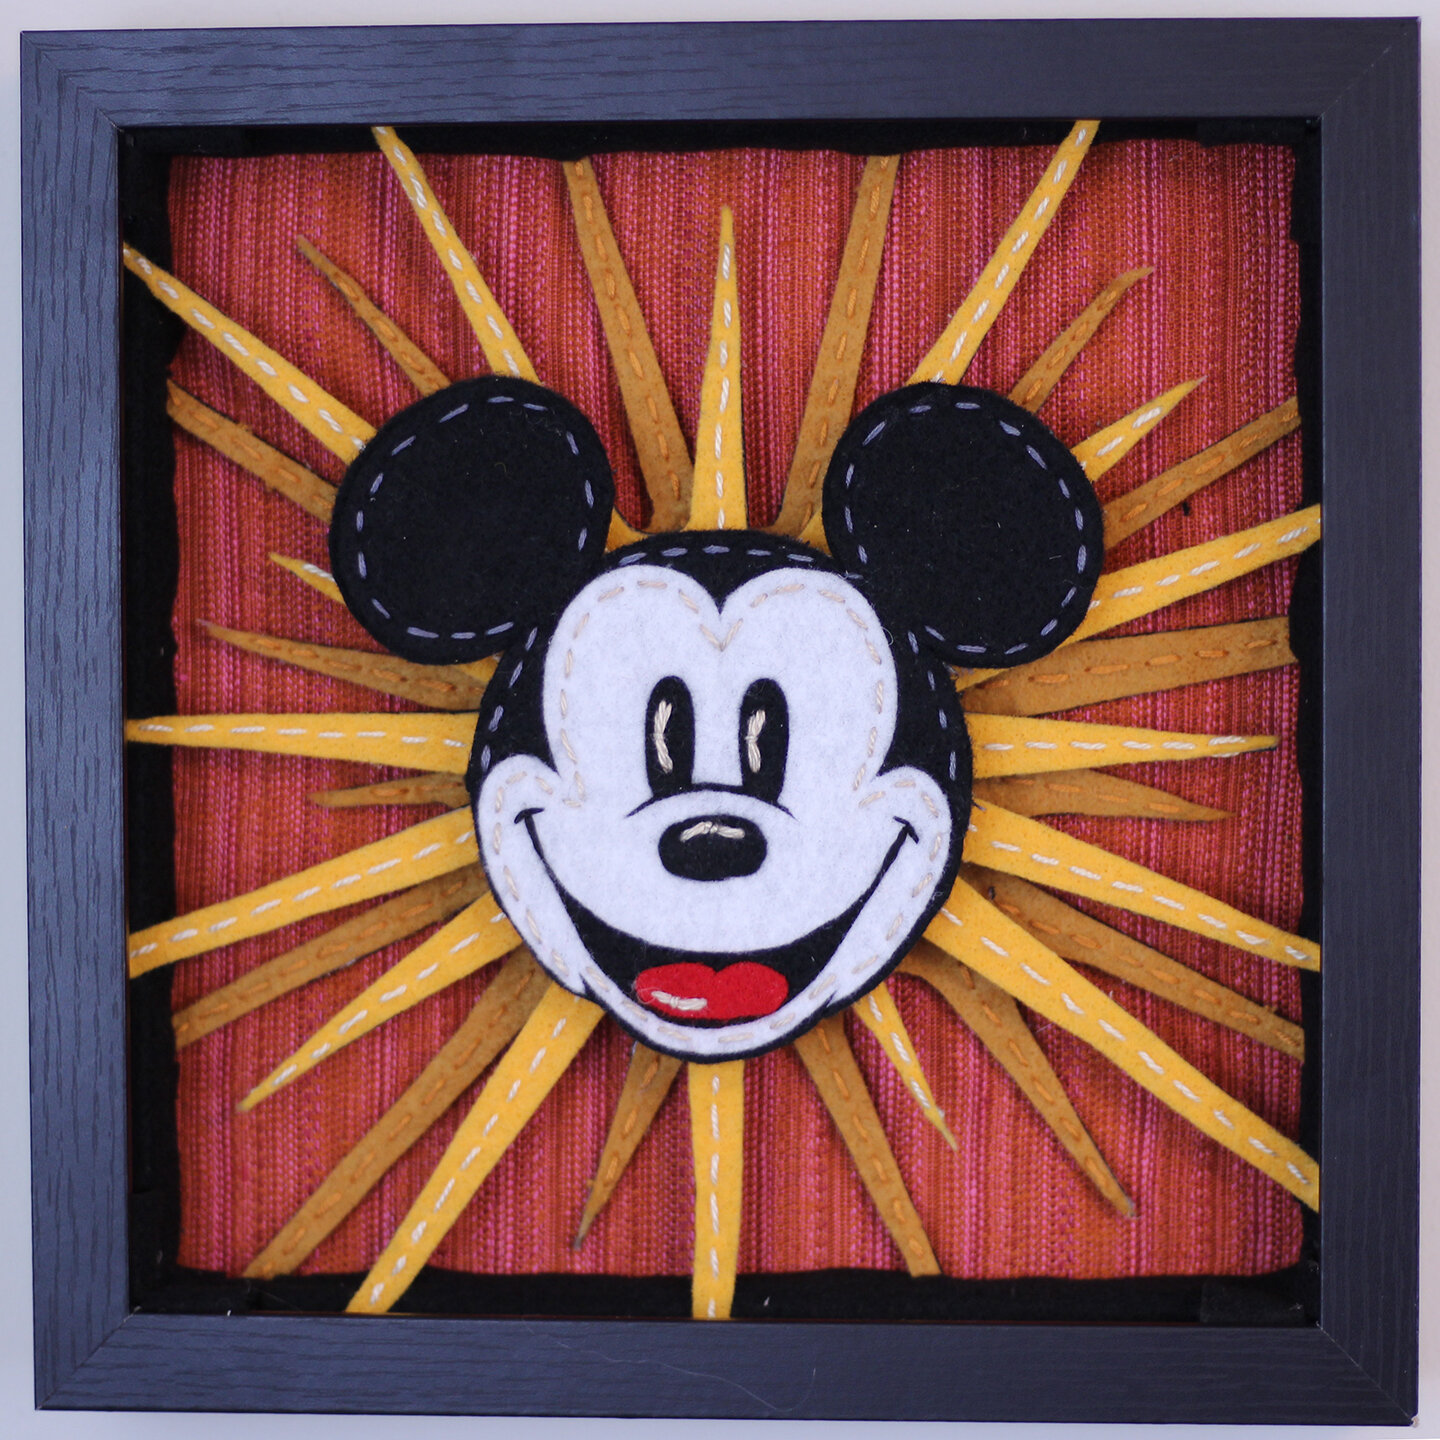 A Mickey Mouse Cartoon